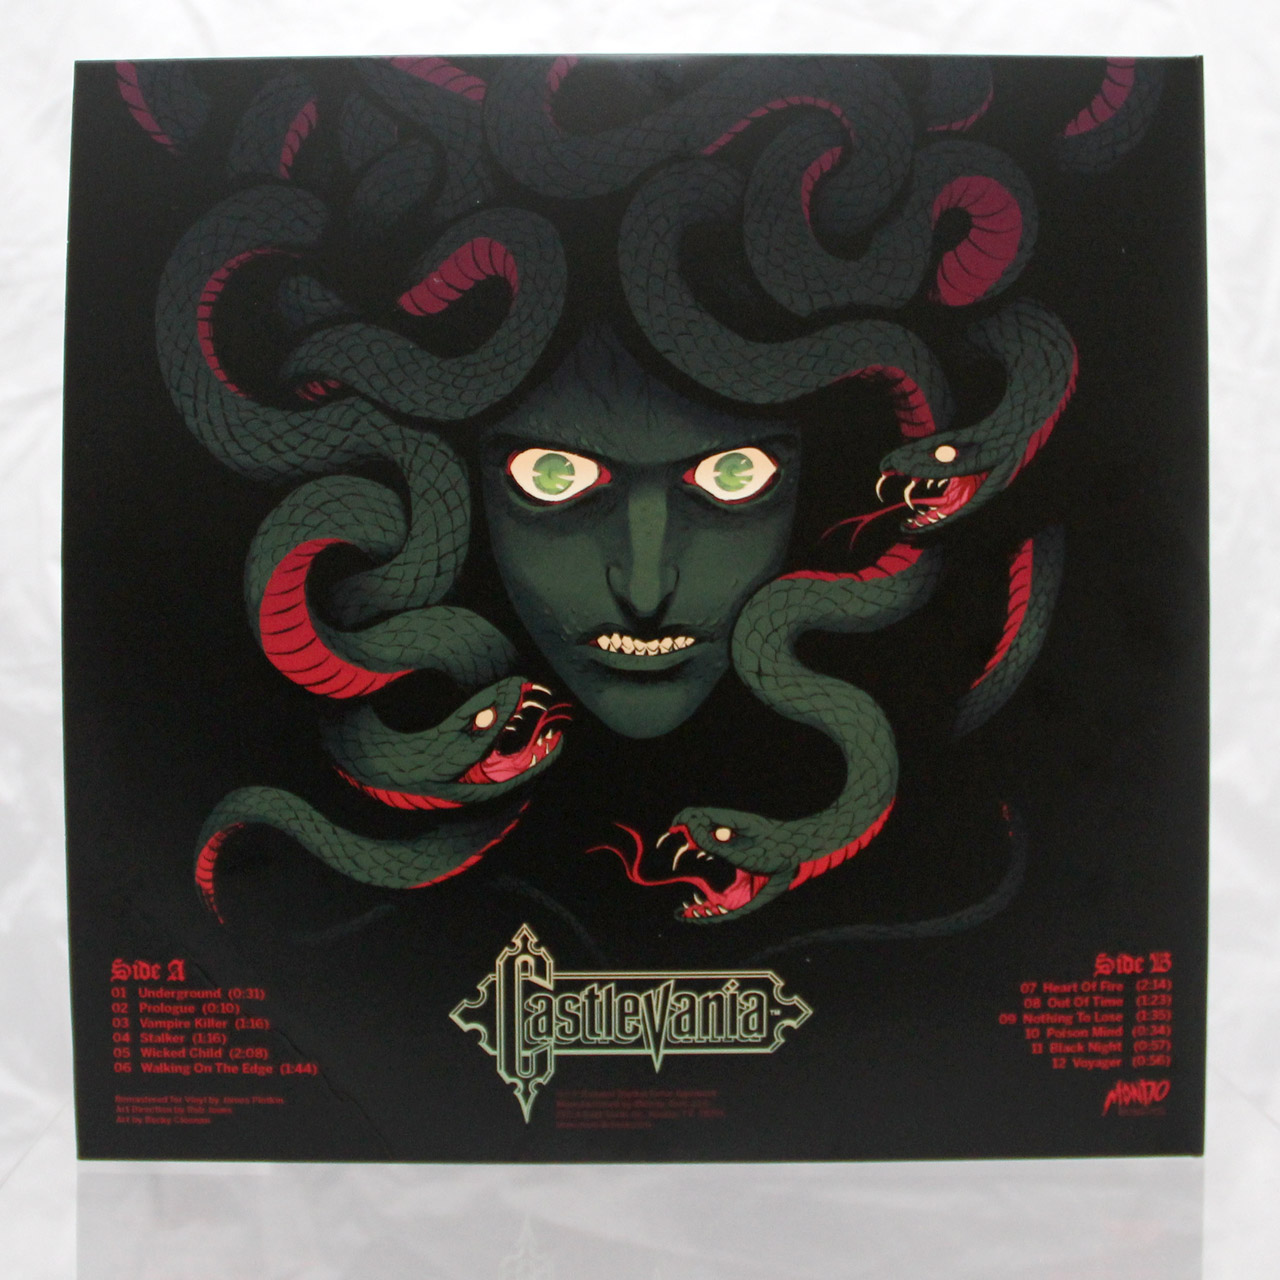 Castlevania OST. Castlevania CD. Soundtrack Art. Kid Dracula NES Cover. Soundtrack 10